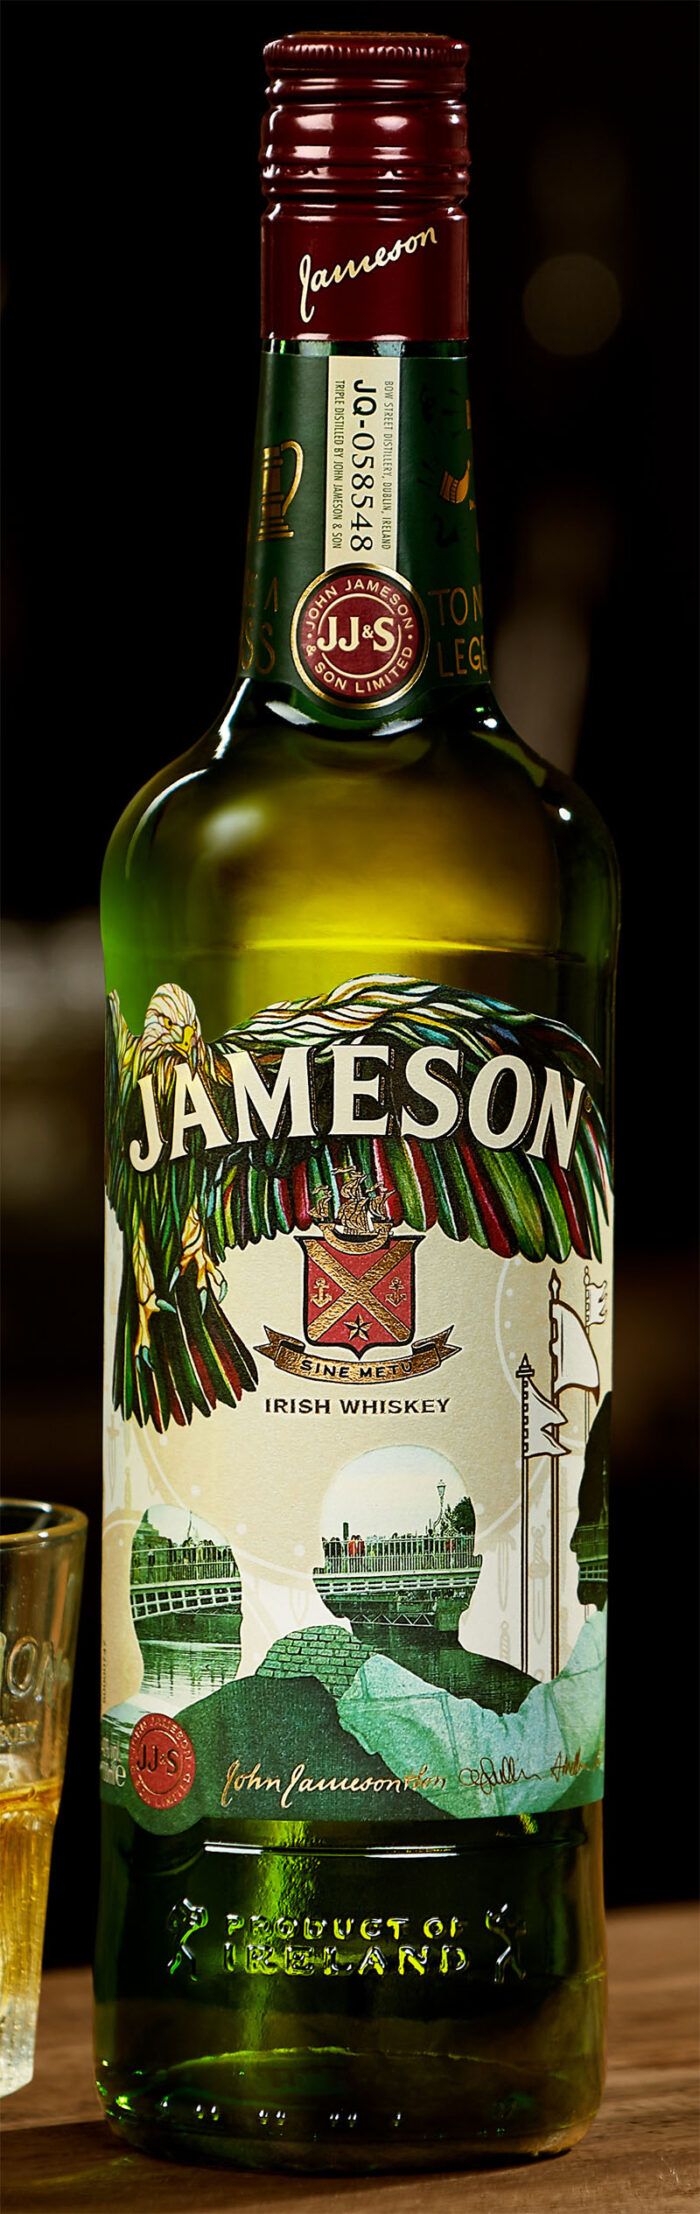 new collage Jameson 2018 Whiskey Bottle